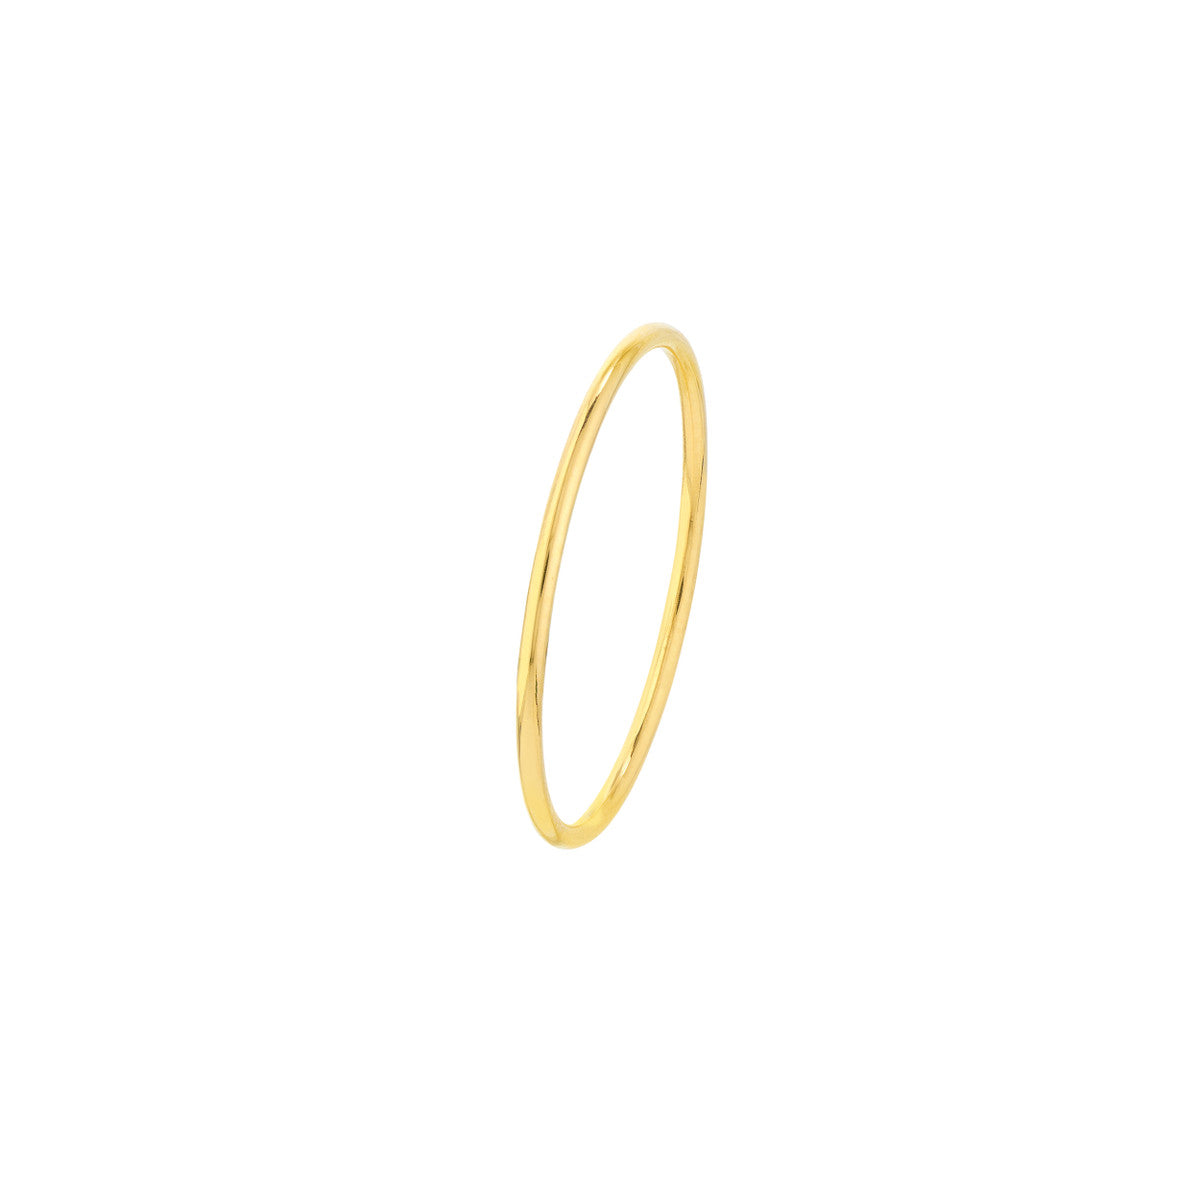 Thin Gold Stacking Ring